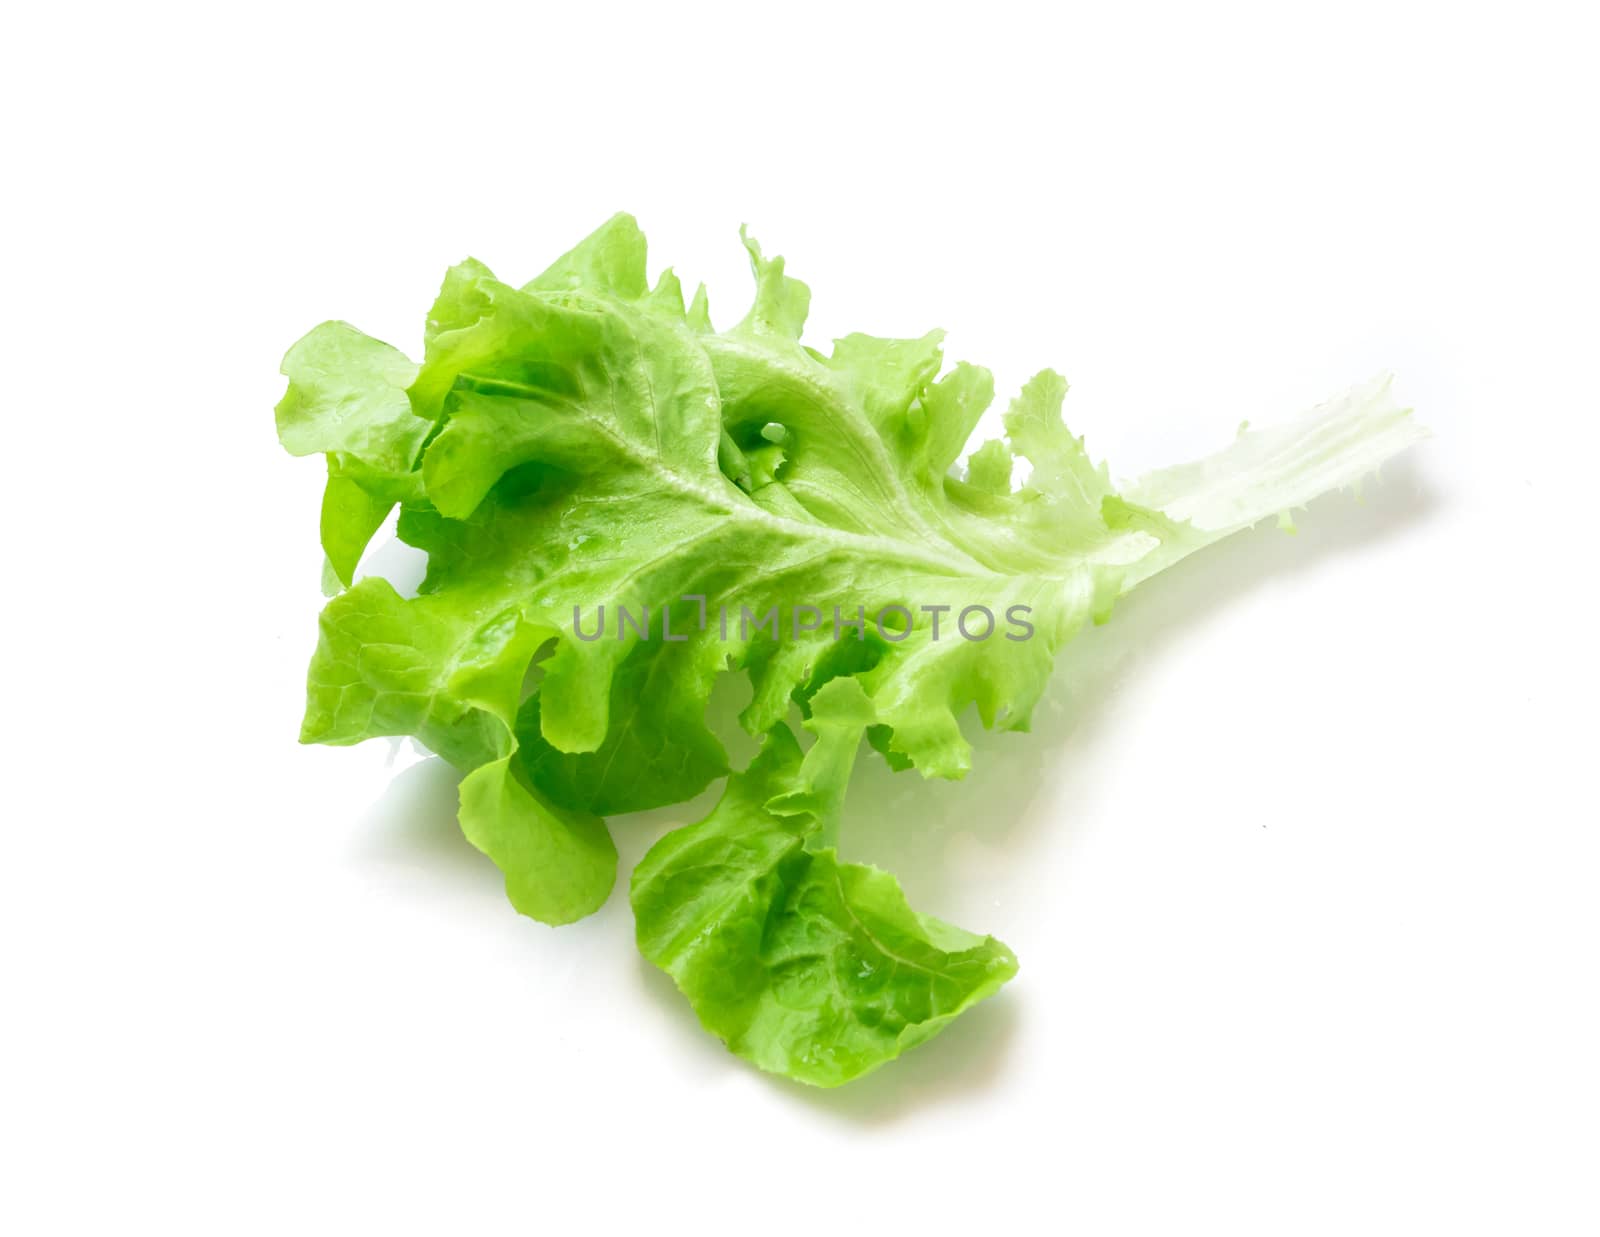 Fresh green and purple lettuce salad leaf vegetable on white background